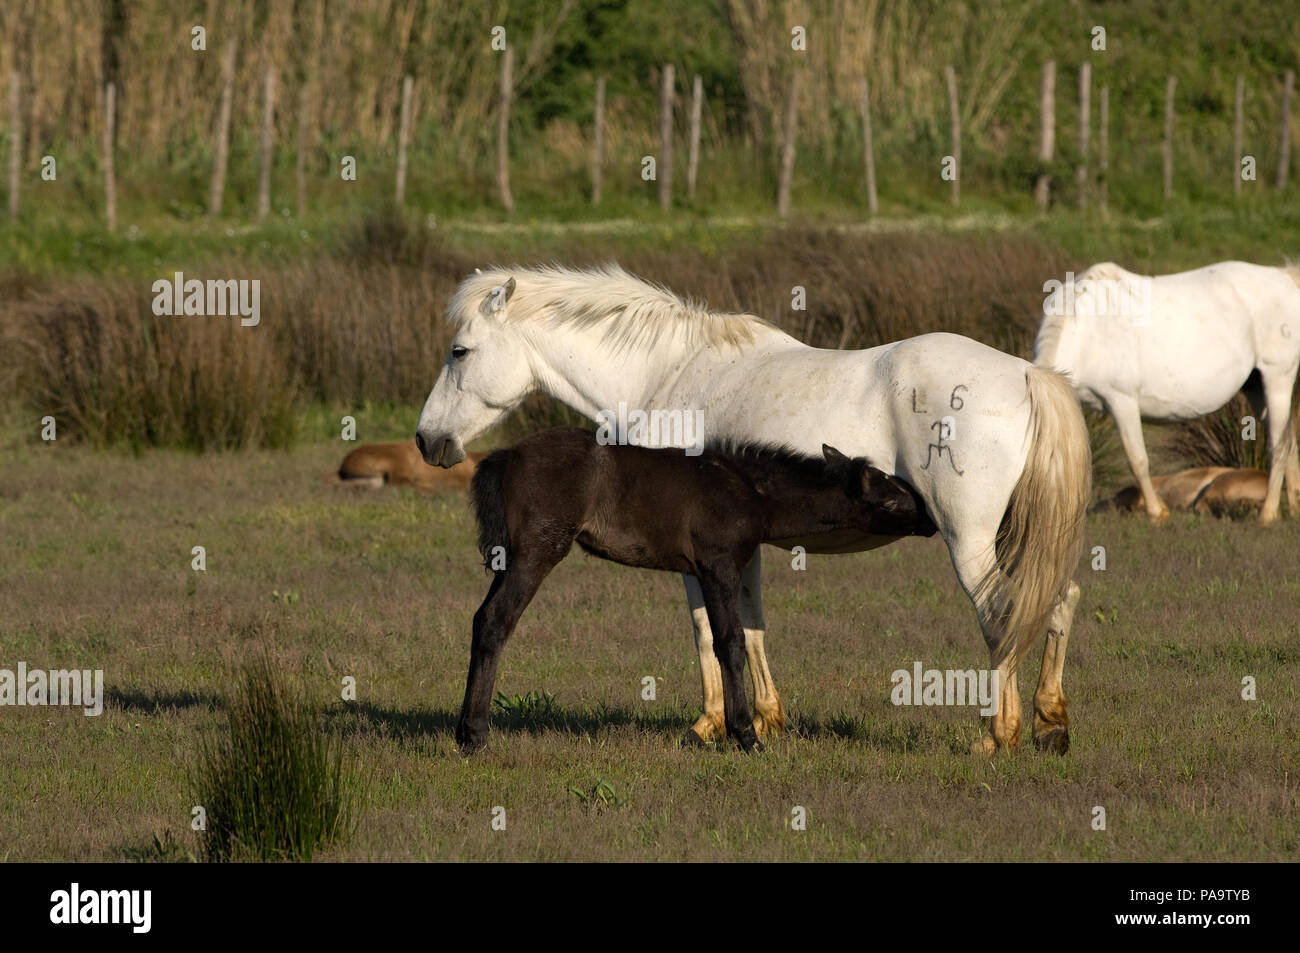 Cheval Camargue - jument et poulain - Cavallo selvaggio della Camargue - mare e puledro - Equus caballus Foto Stock